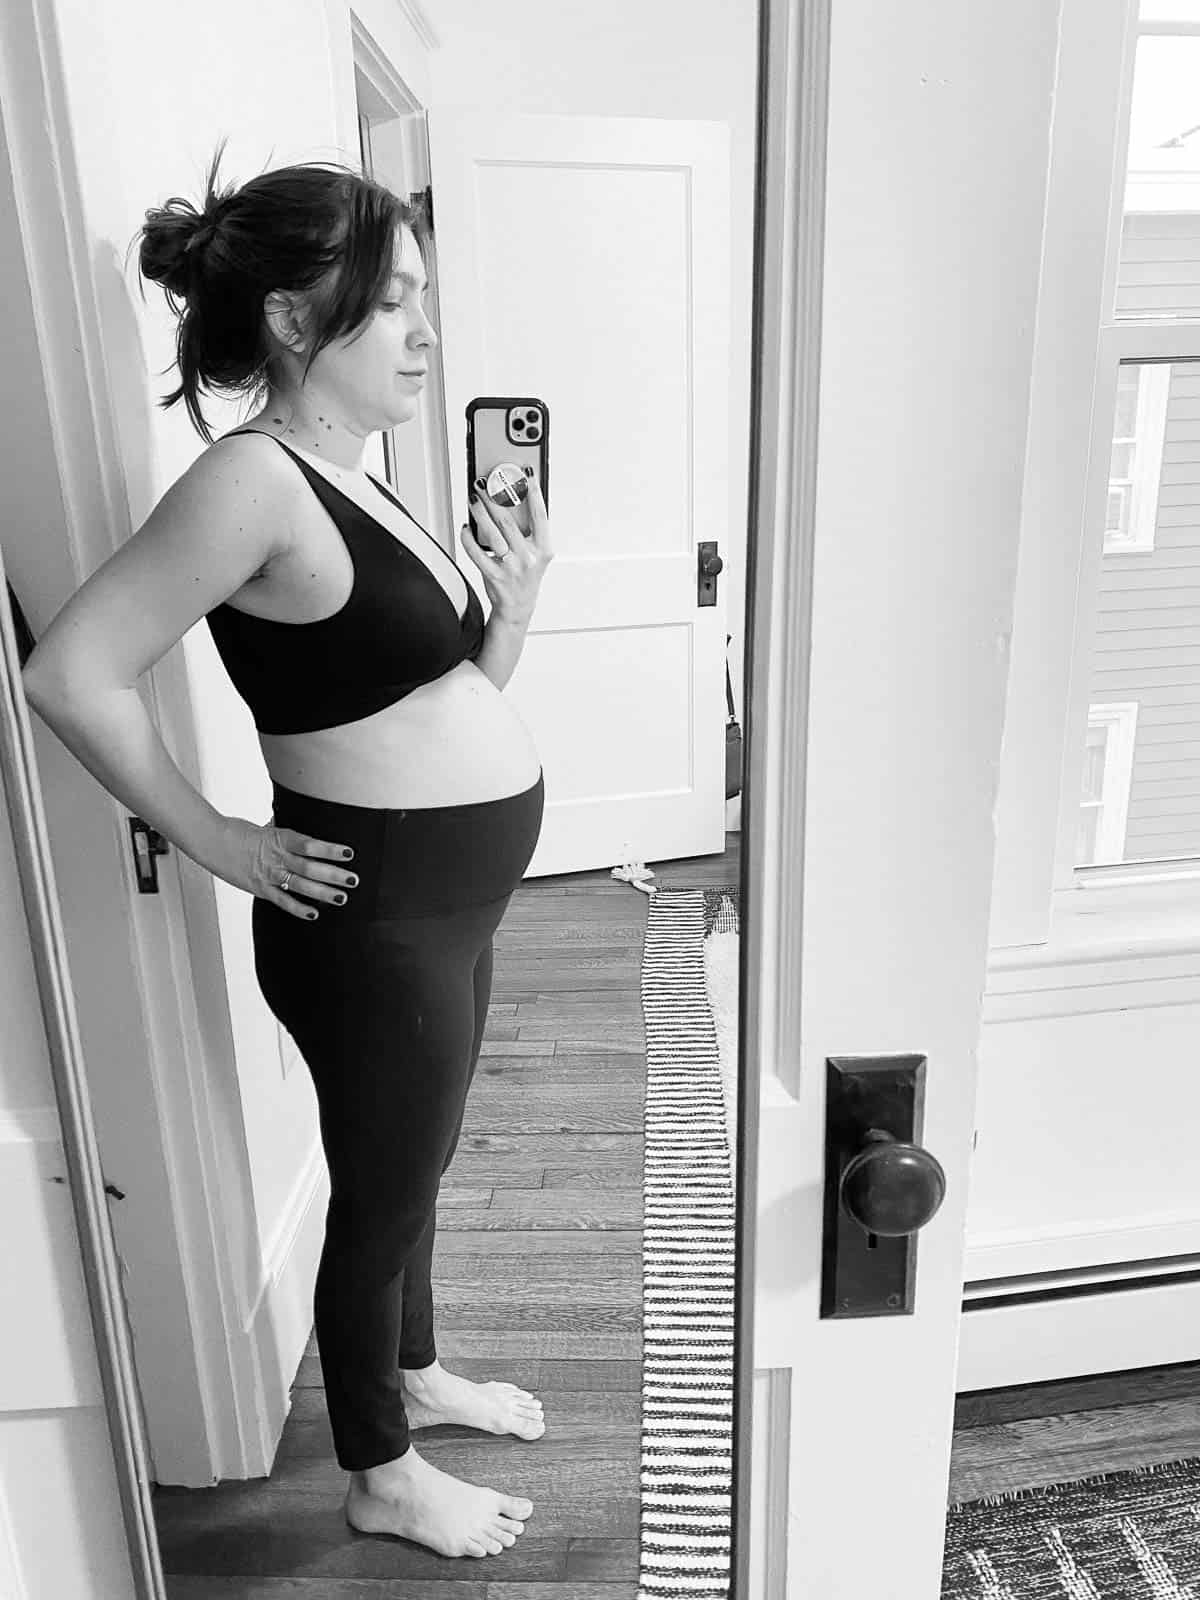 kara lydon second trimester pregnancy side profile mirror selfie pregnant journey yoga pants sports bra